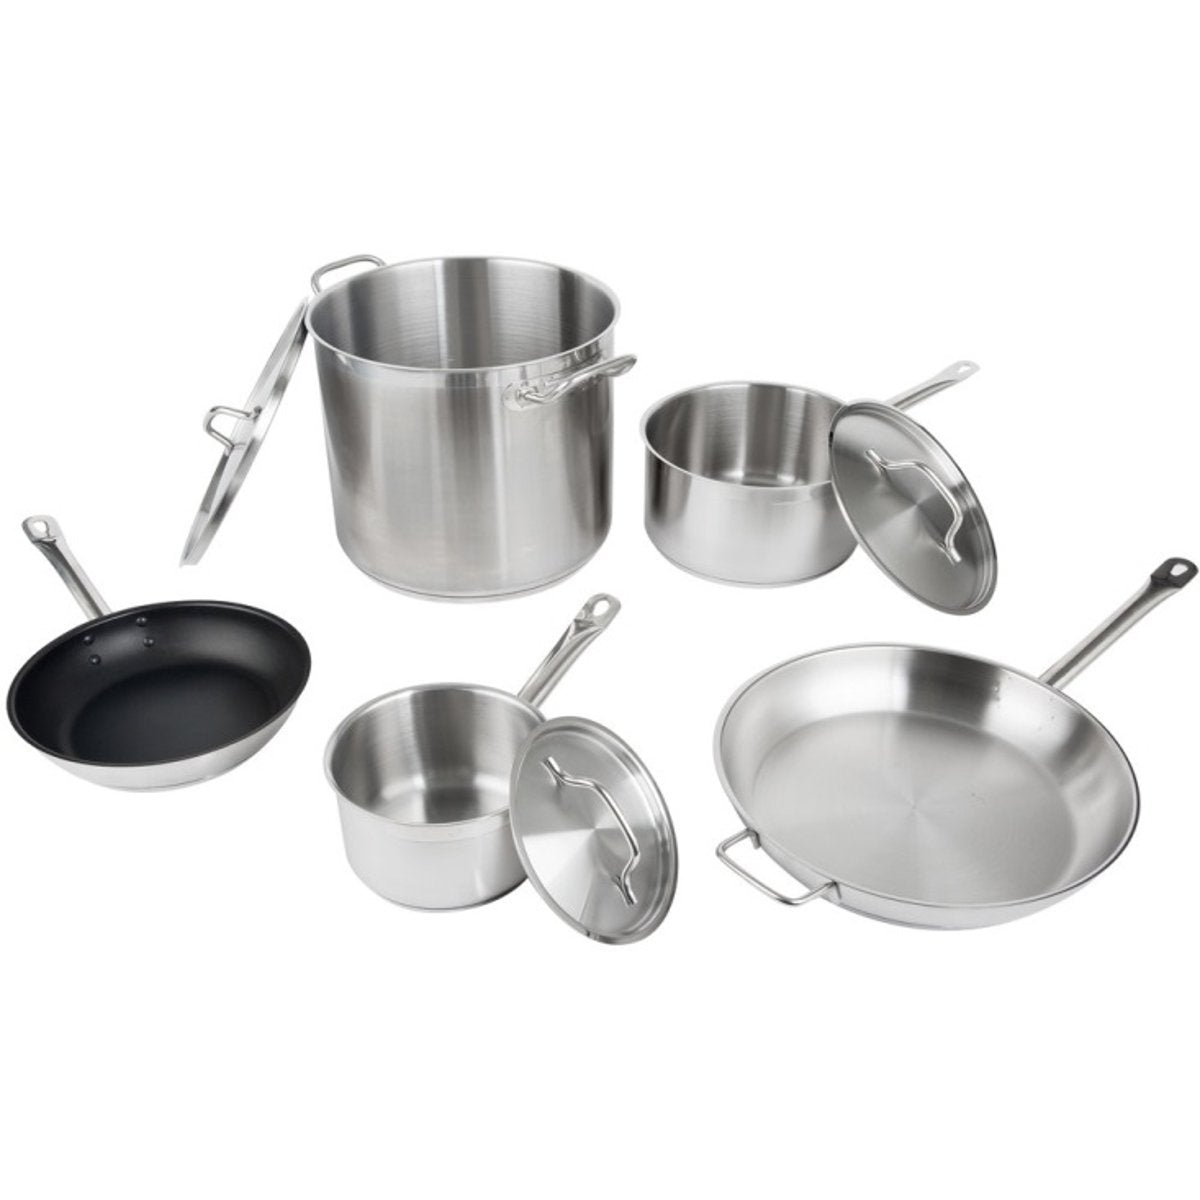 Set of Stainless steel Cookware 8 pcs Sauce pans Stew pan Fry pans Rental